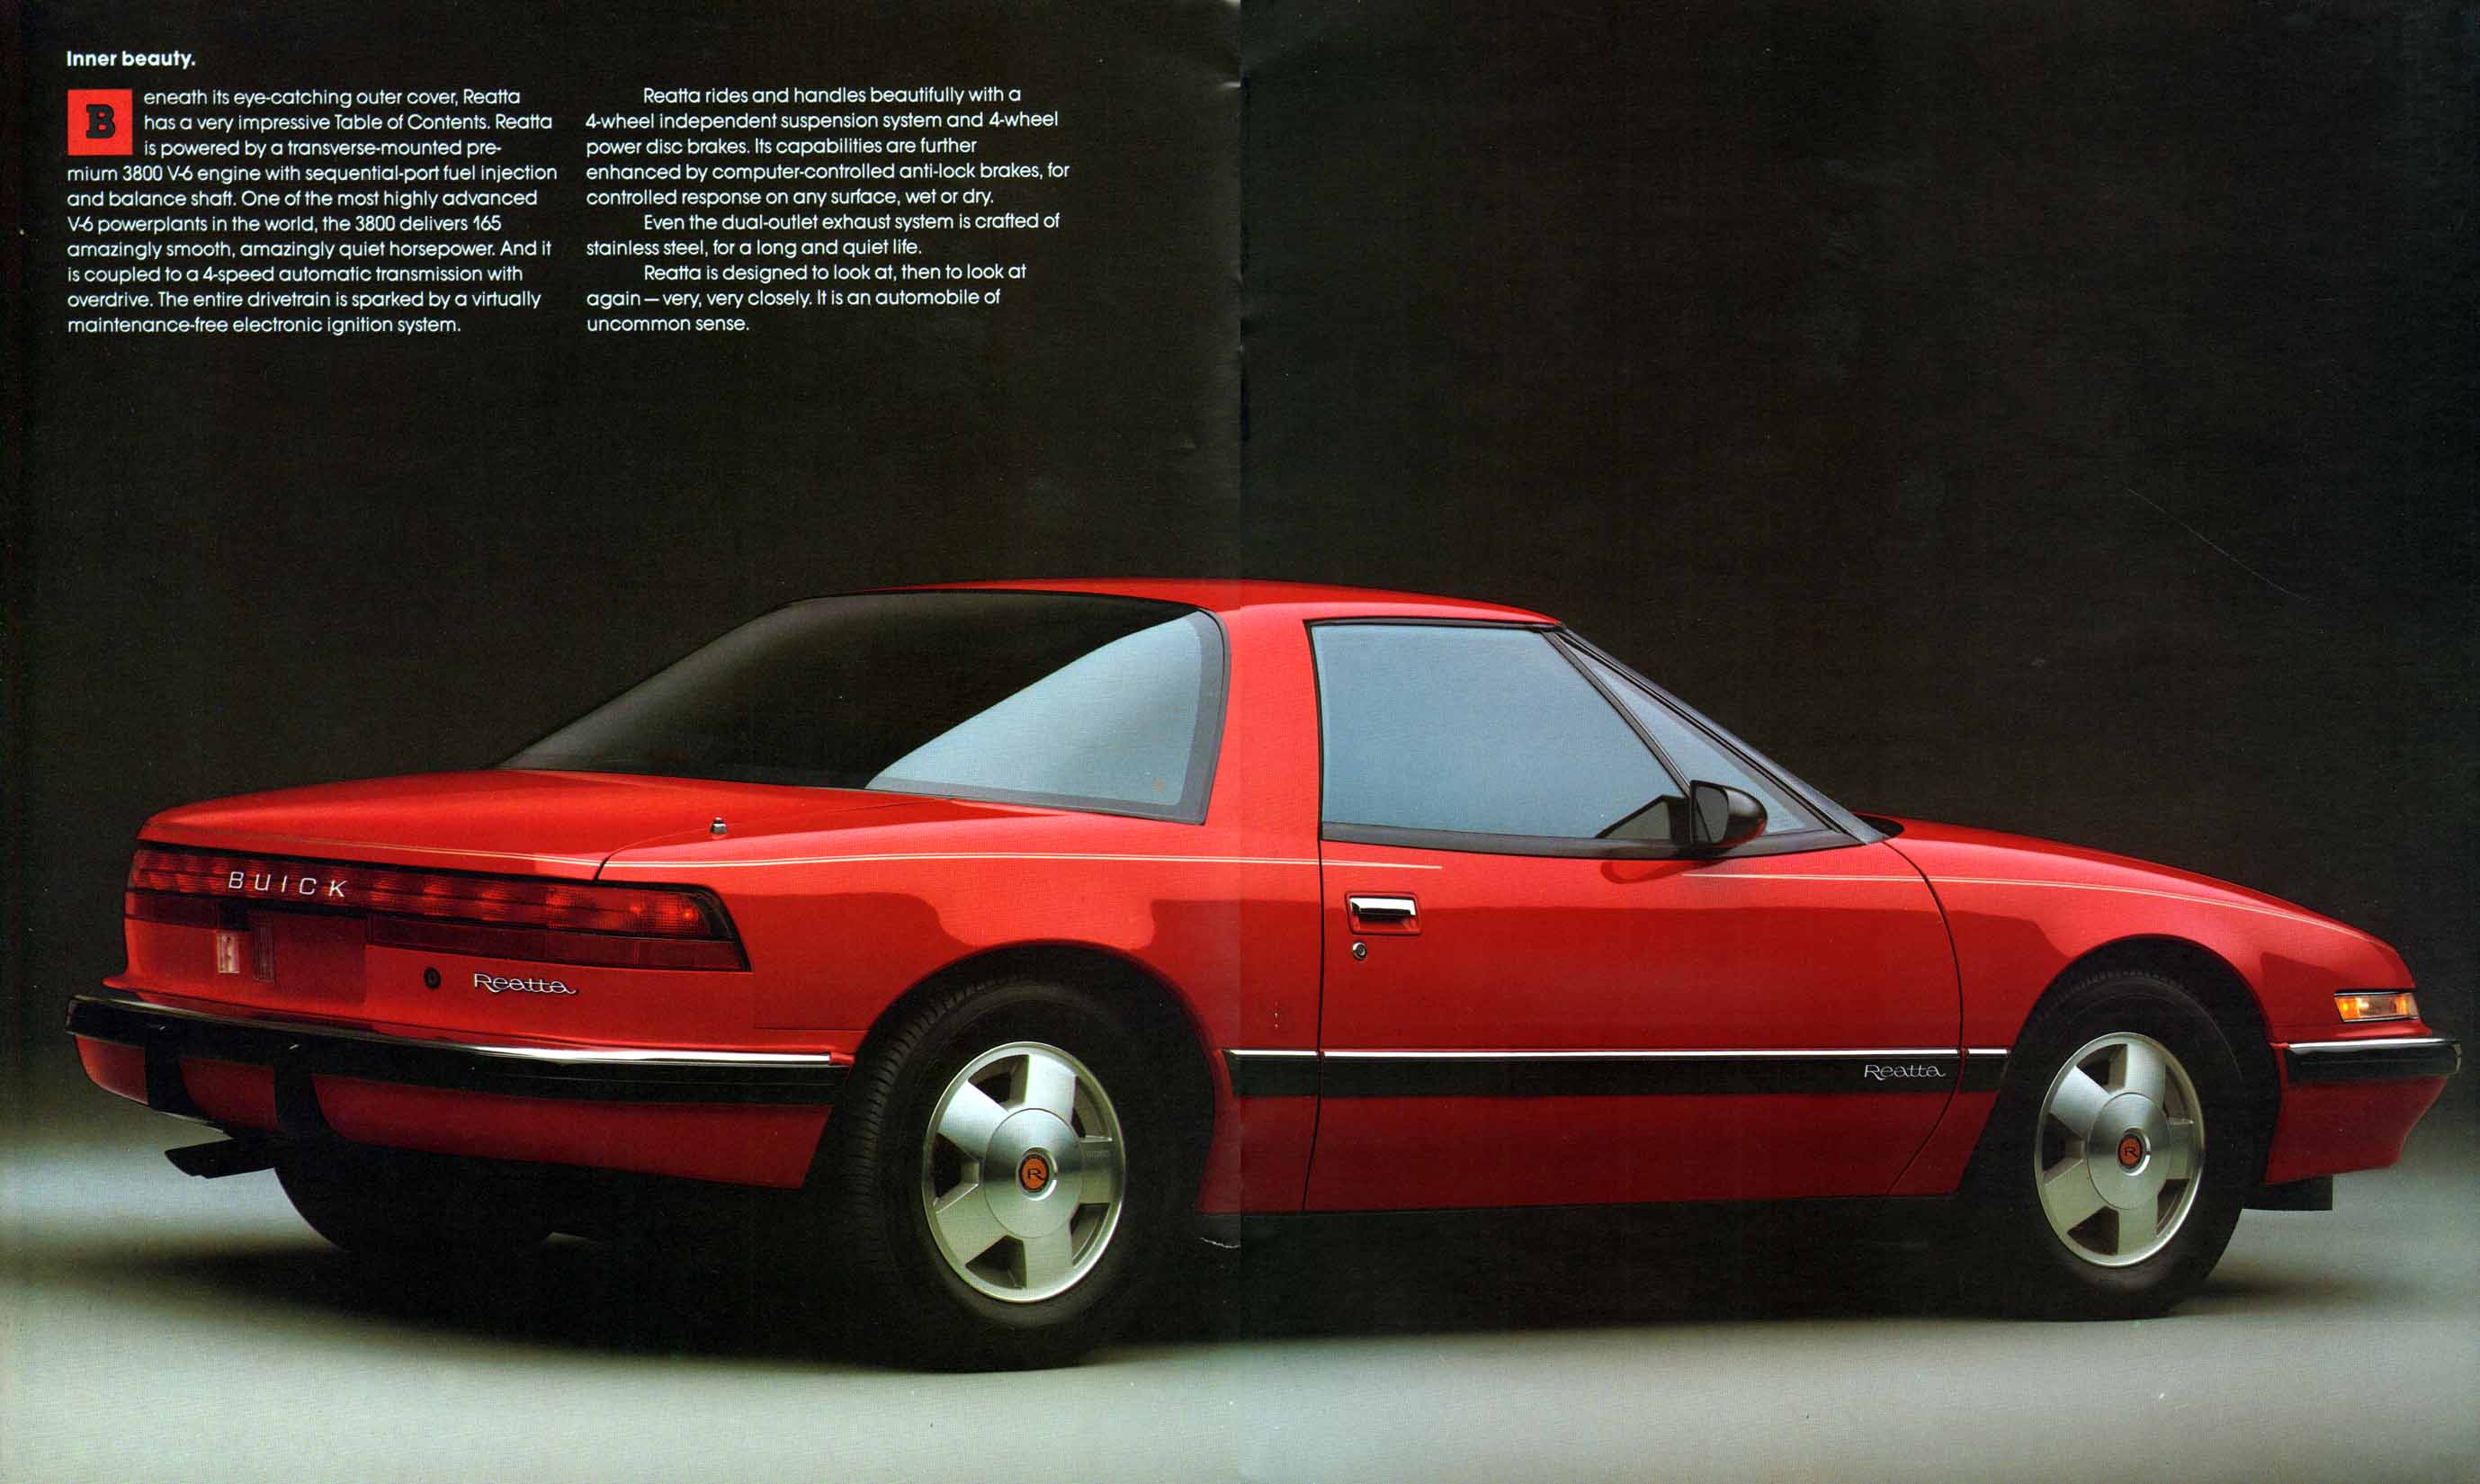 1988 Buick Reatta-08-09